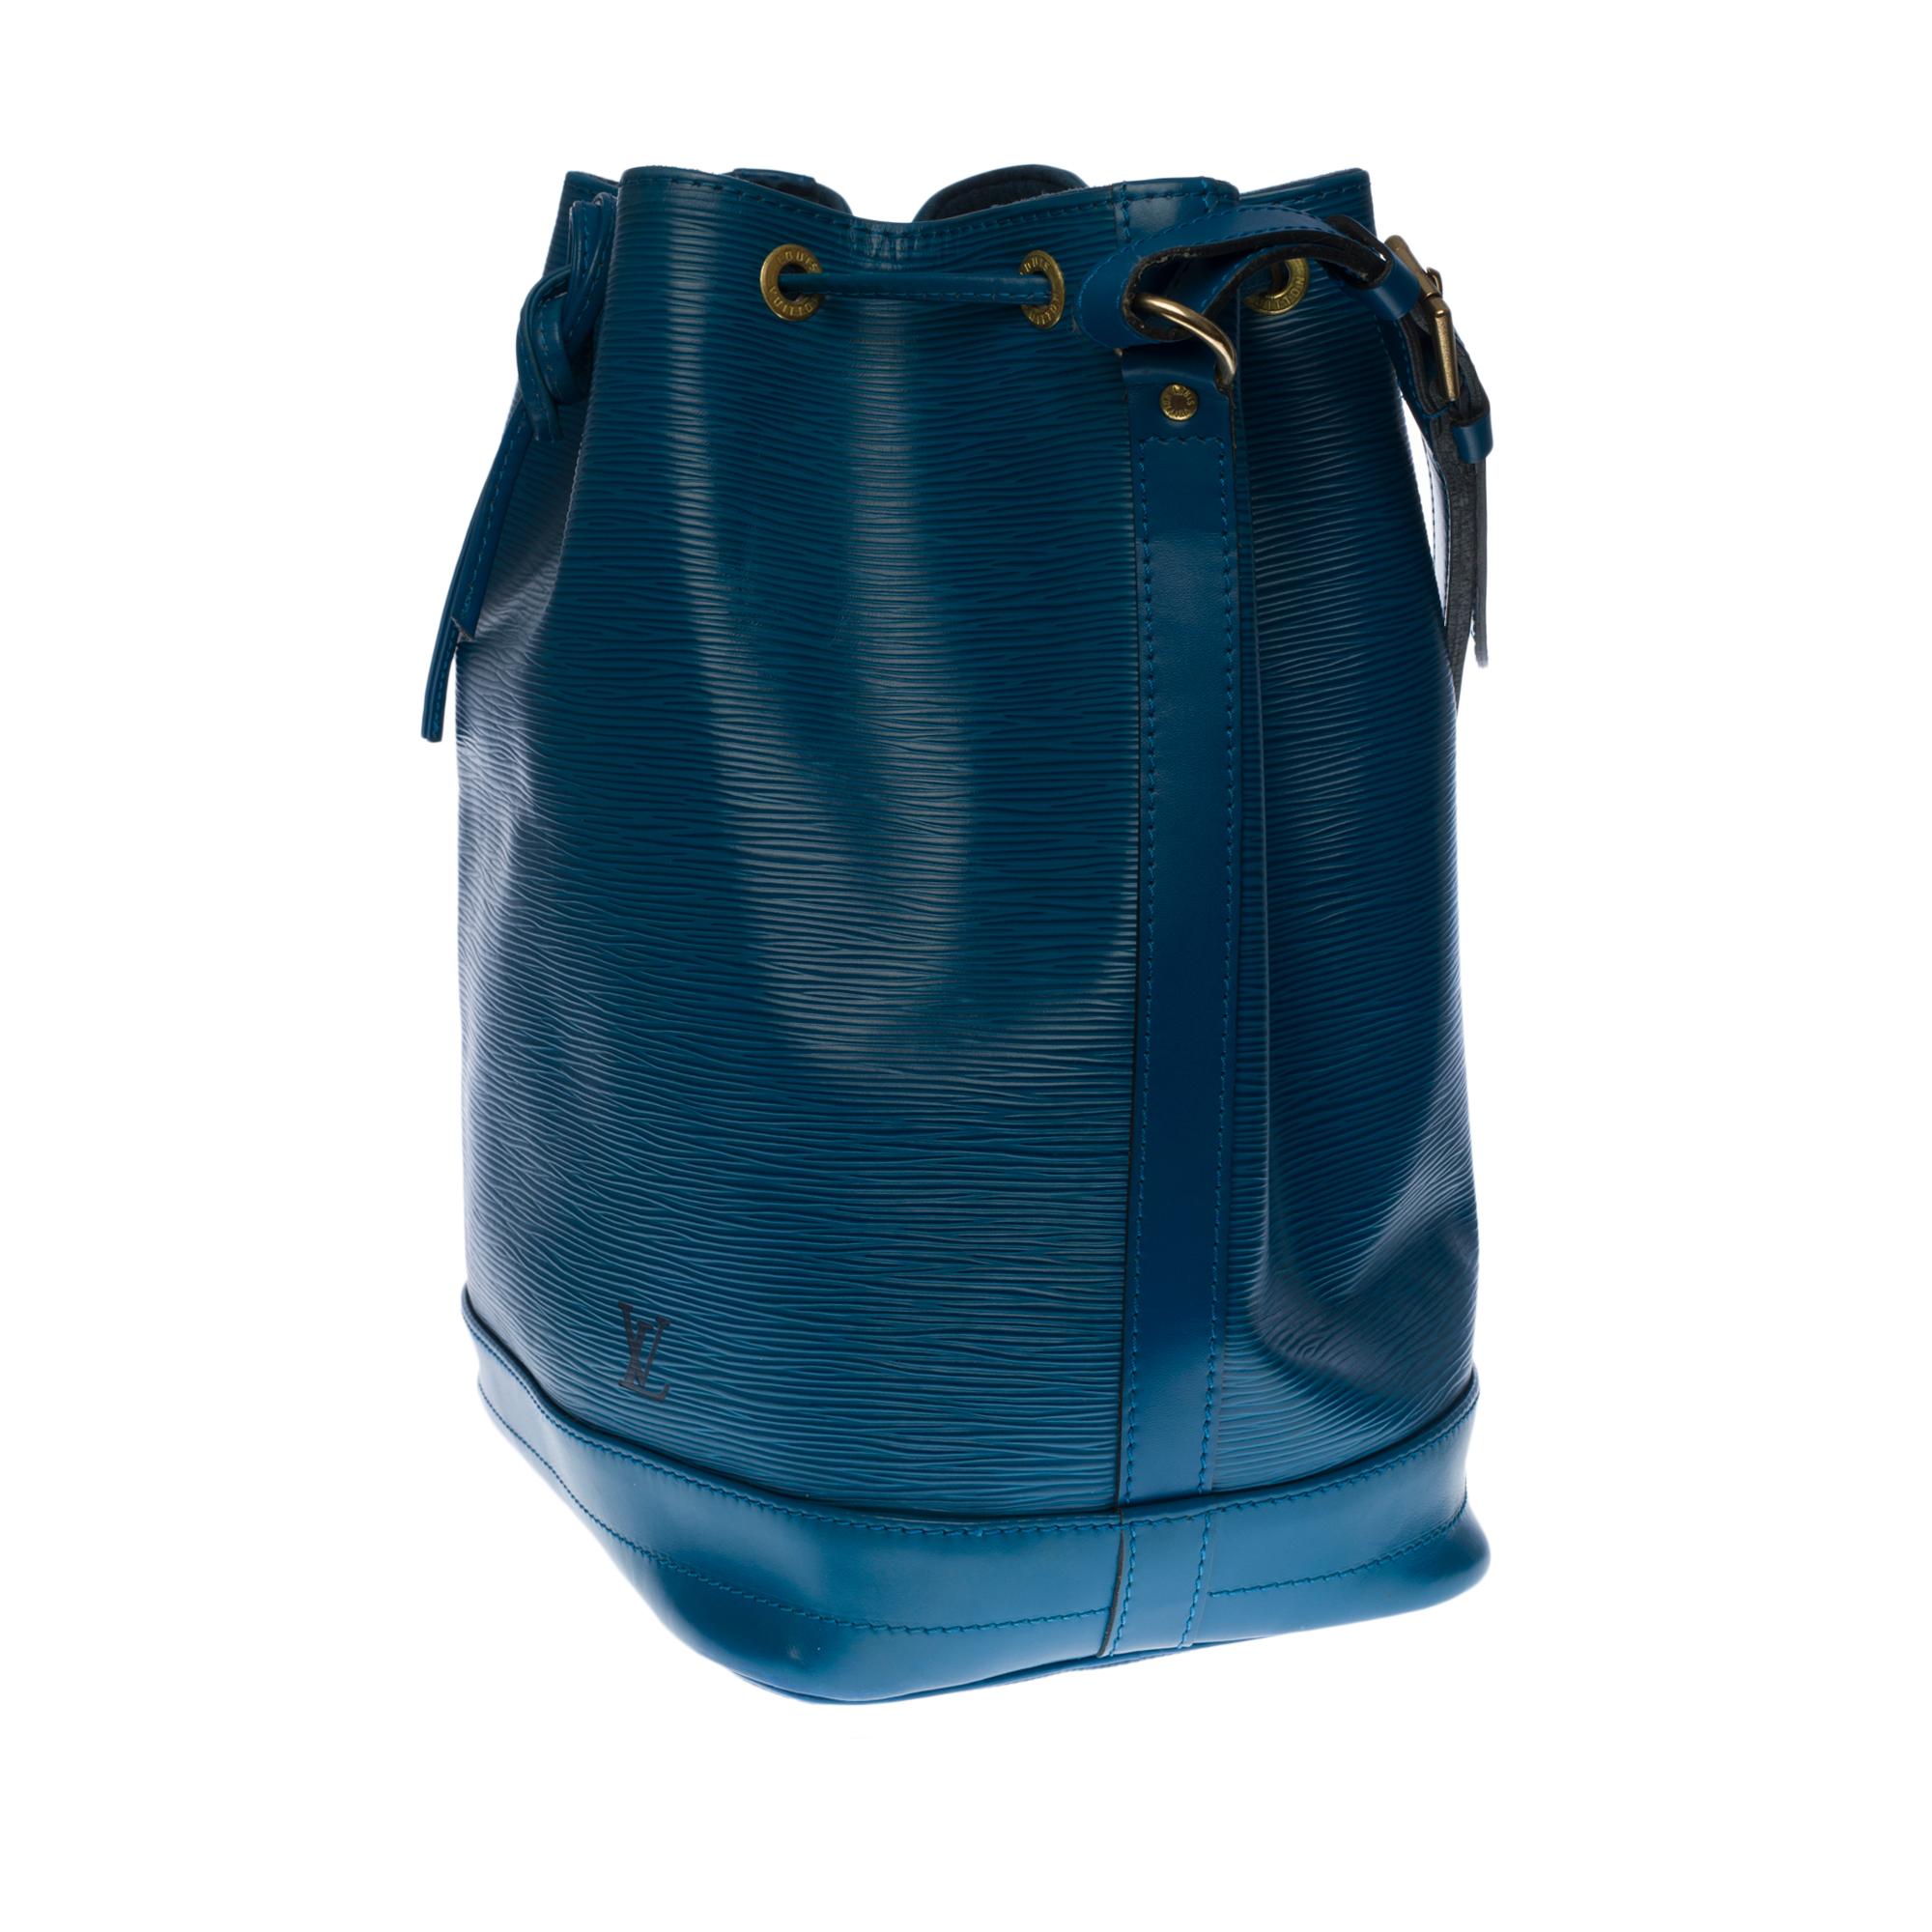 Blue Louis Vuitton Noé Grand modele shoulder bag in blue epi leather with GHW